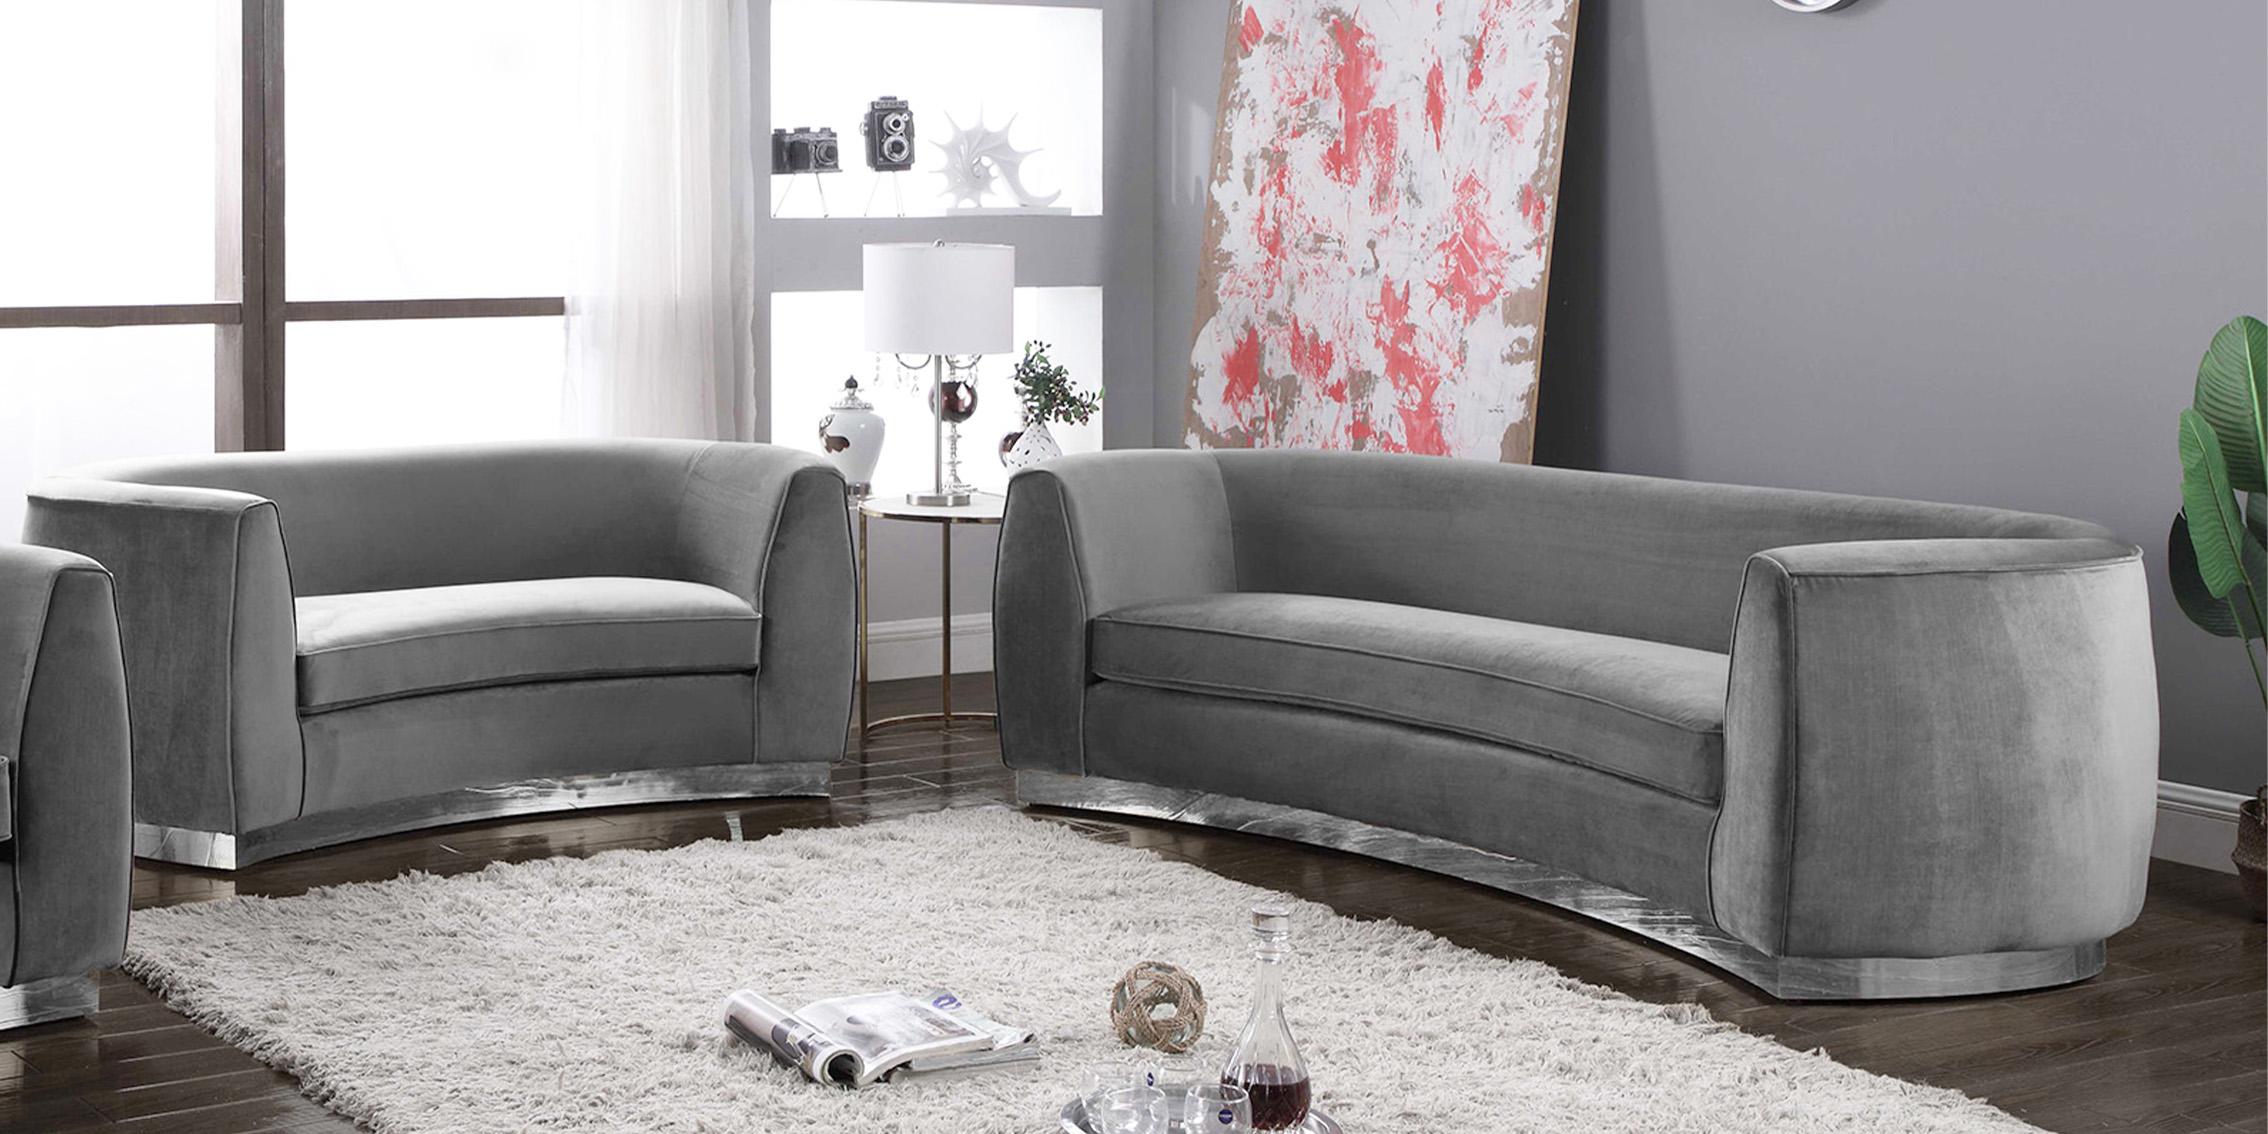 Contemporary, Modern Sofa Set Julian 621Grey-S-Set-2 621Grey-S-Set-2 in Gray Soft Velvet